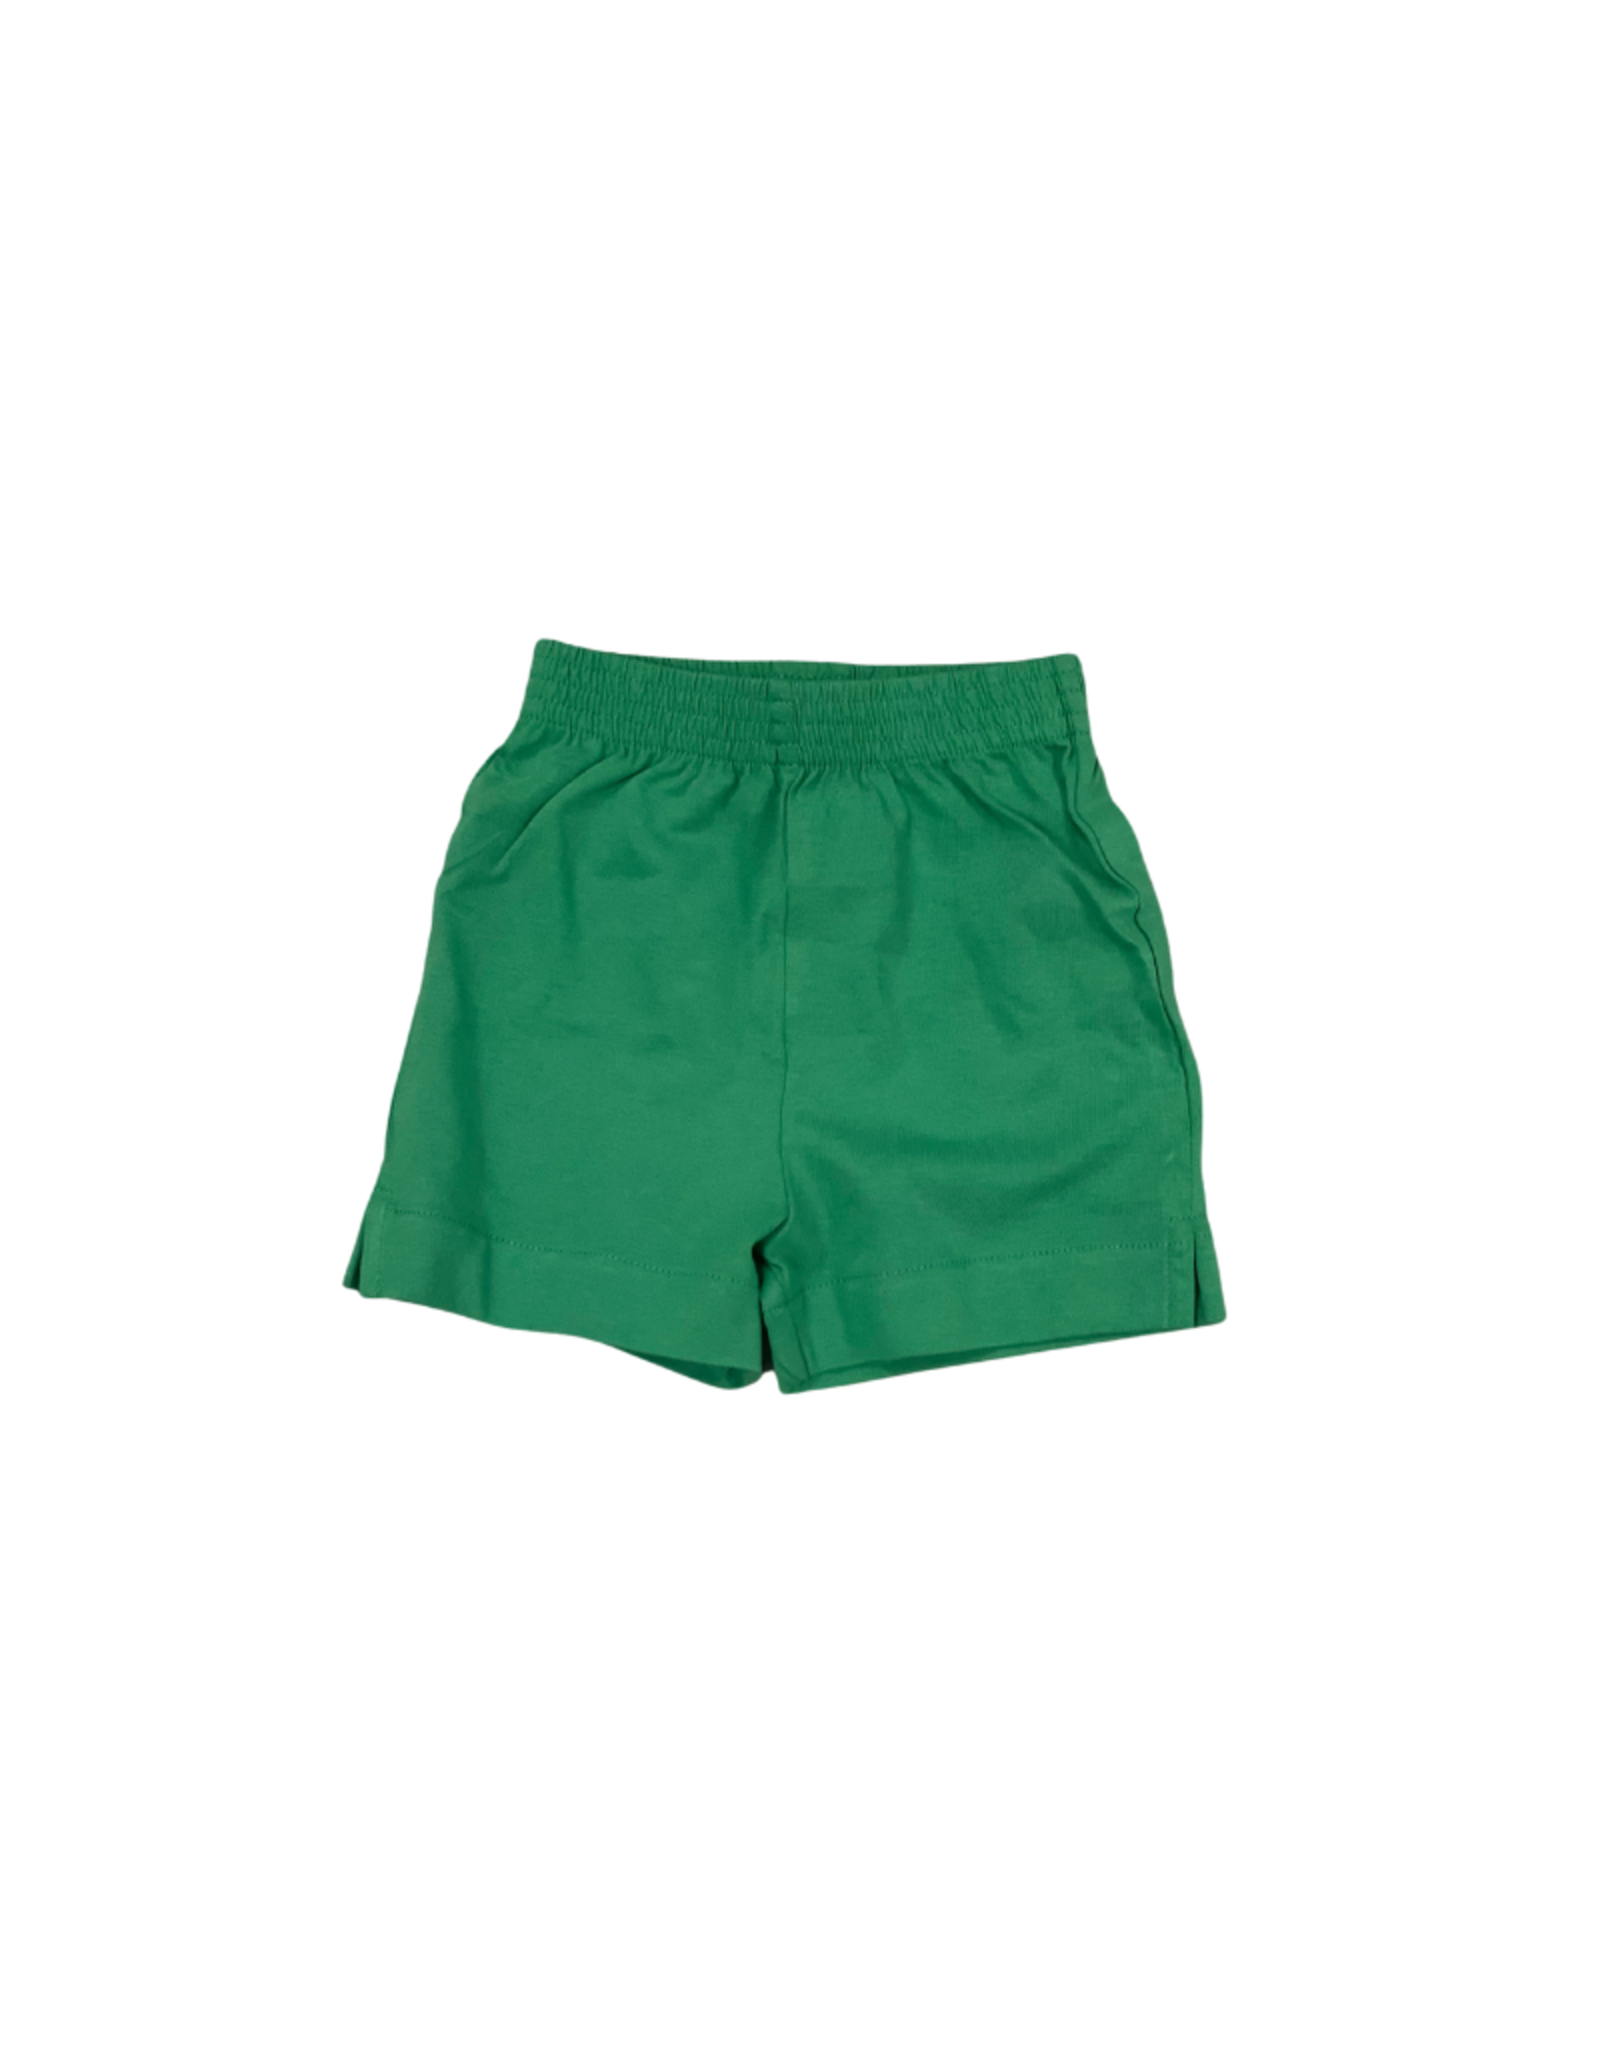 Luigi Green Jersey Shorts